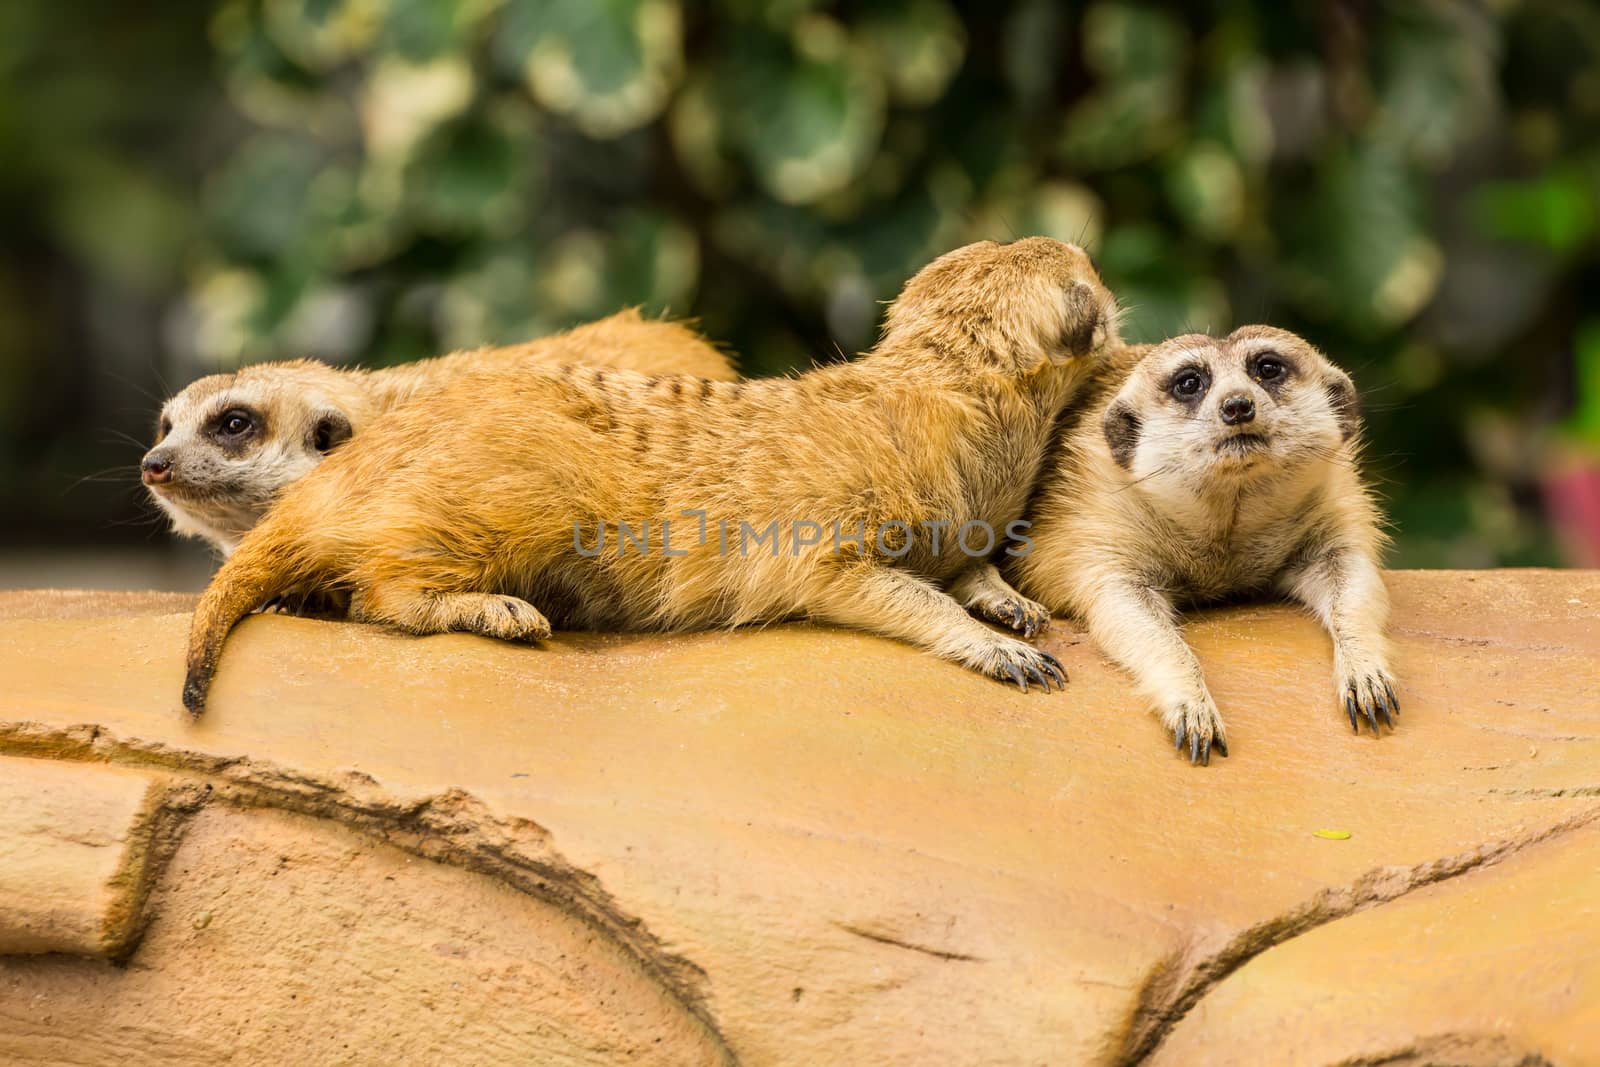 Meerkat resting on ground in zoo, Thailand.